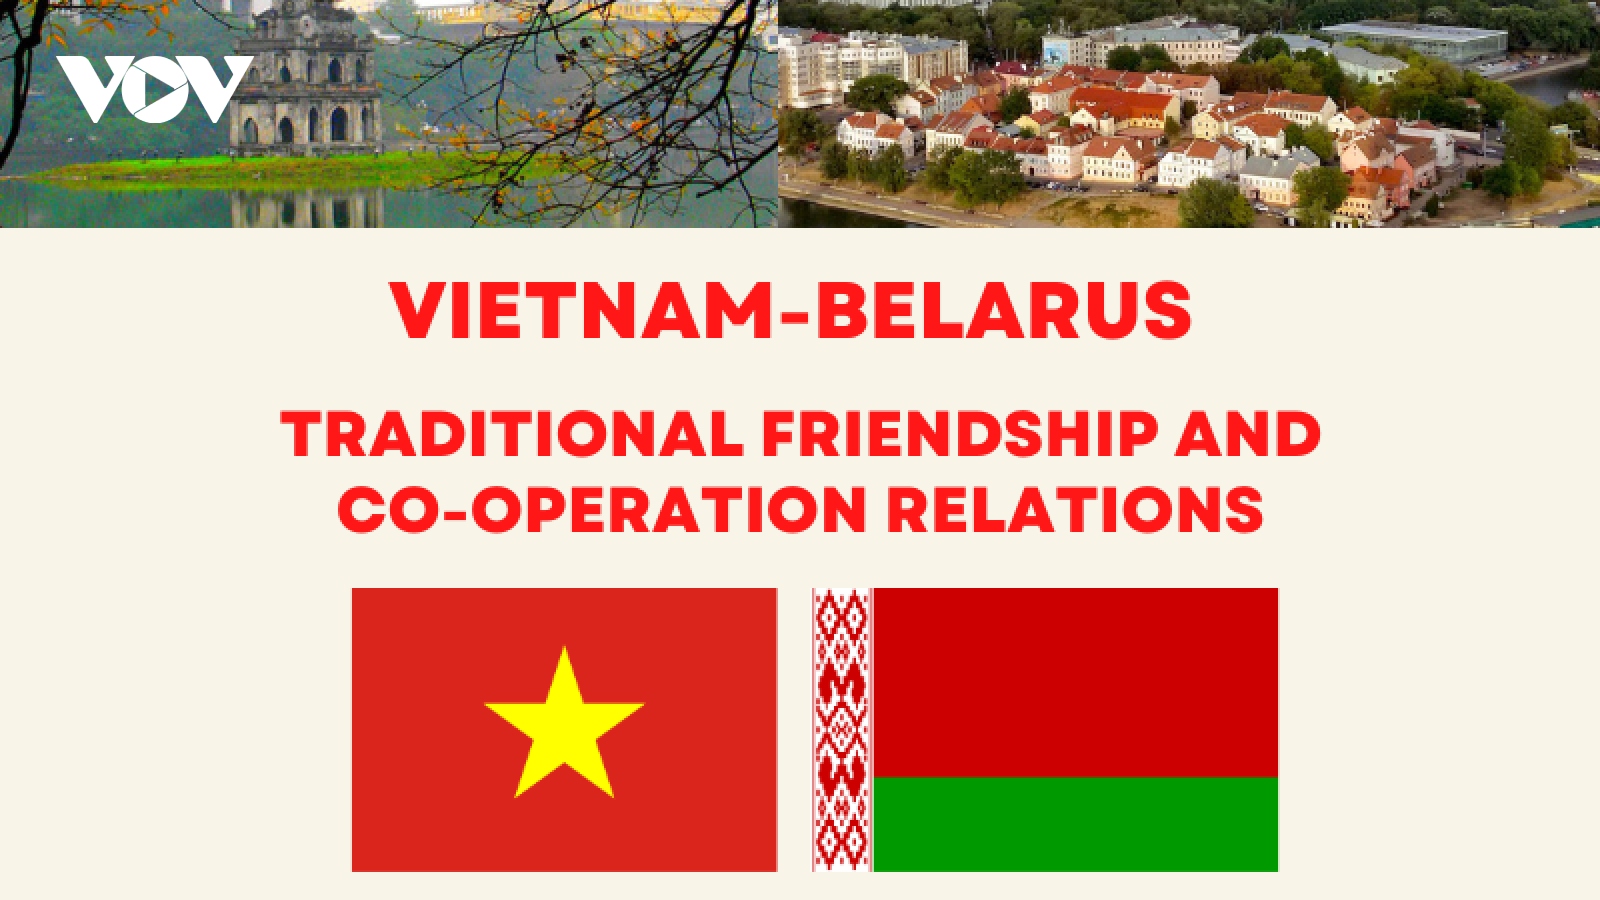 Major milestones in Vietnam-Belarus traditional friendship and co-operative ties